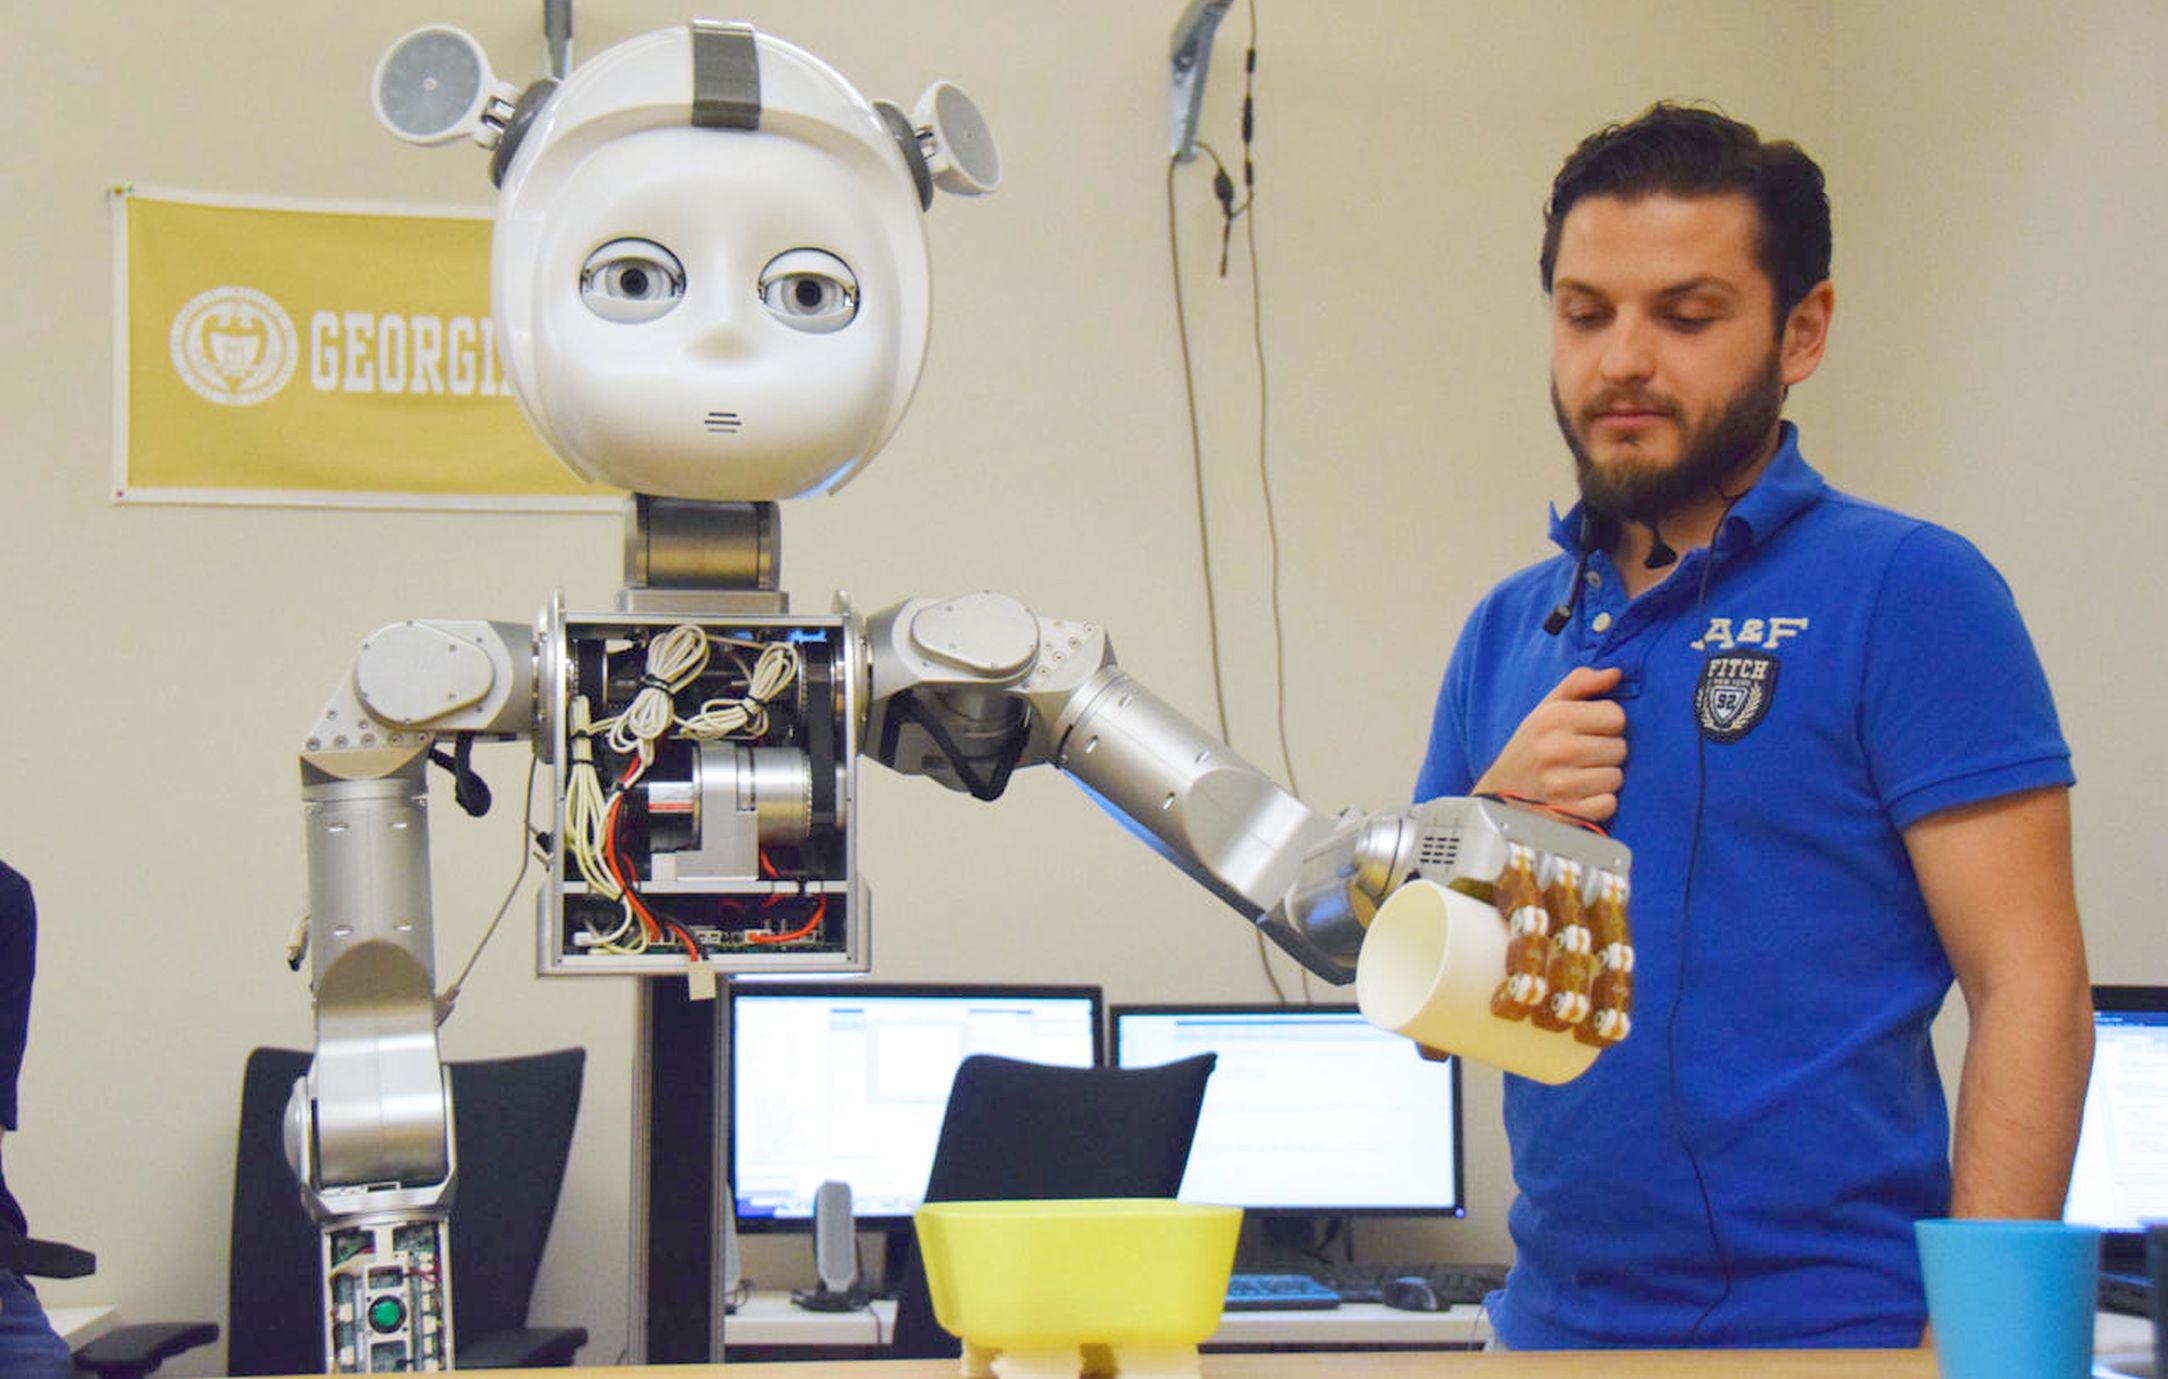 Robot demonstration at GT during National Robotics Week